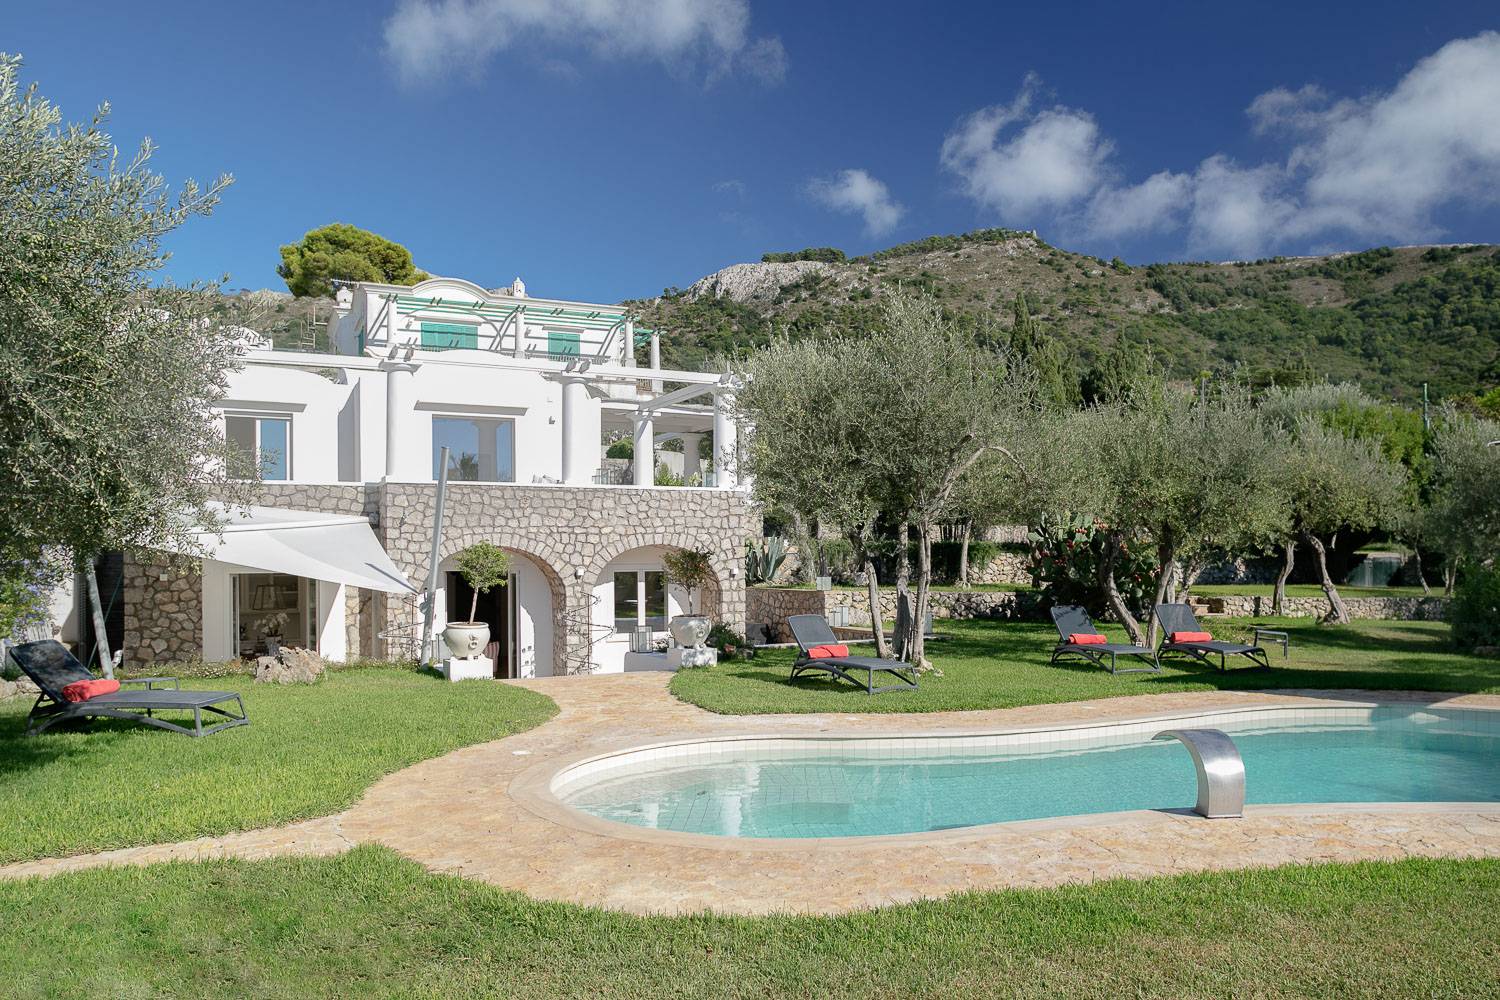 Villa in Capri, heated pool, wonderful garden, parking.